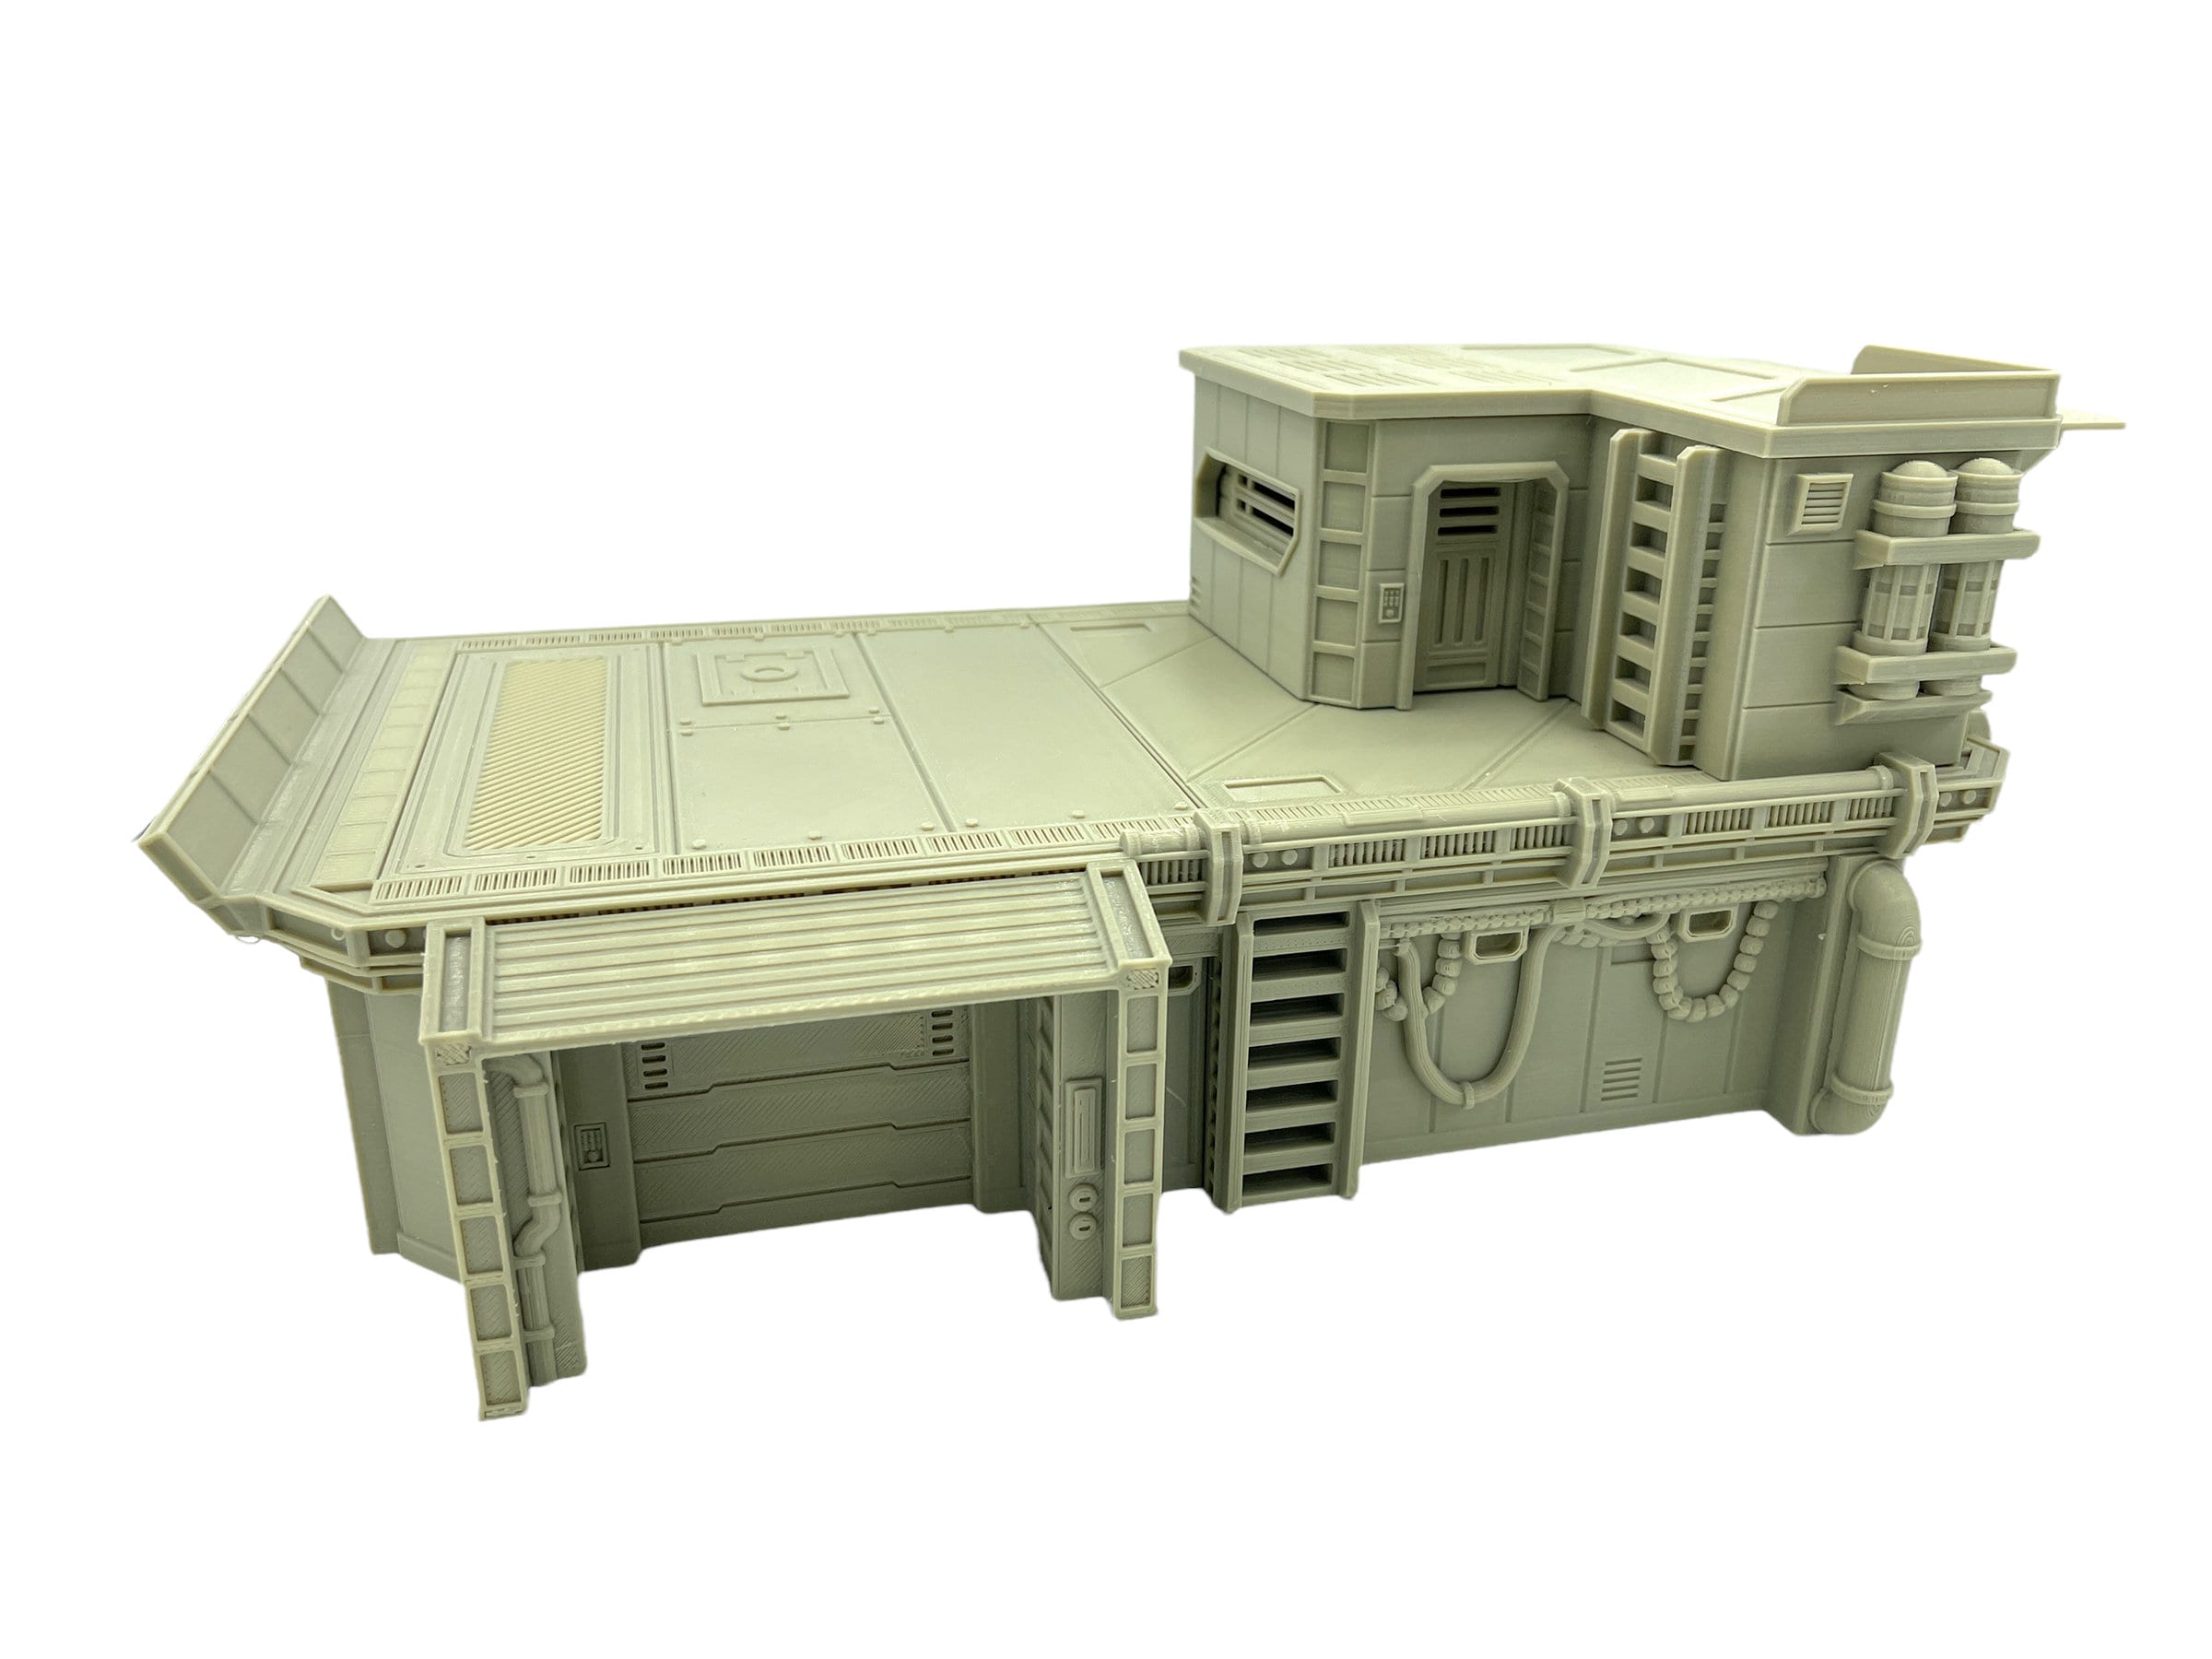 3d Printed / Command Platform / Star Wars Legion Compatible Terrain / Corvus Games Terrain Licensed Printer / Print to Order